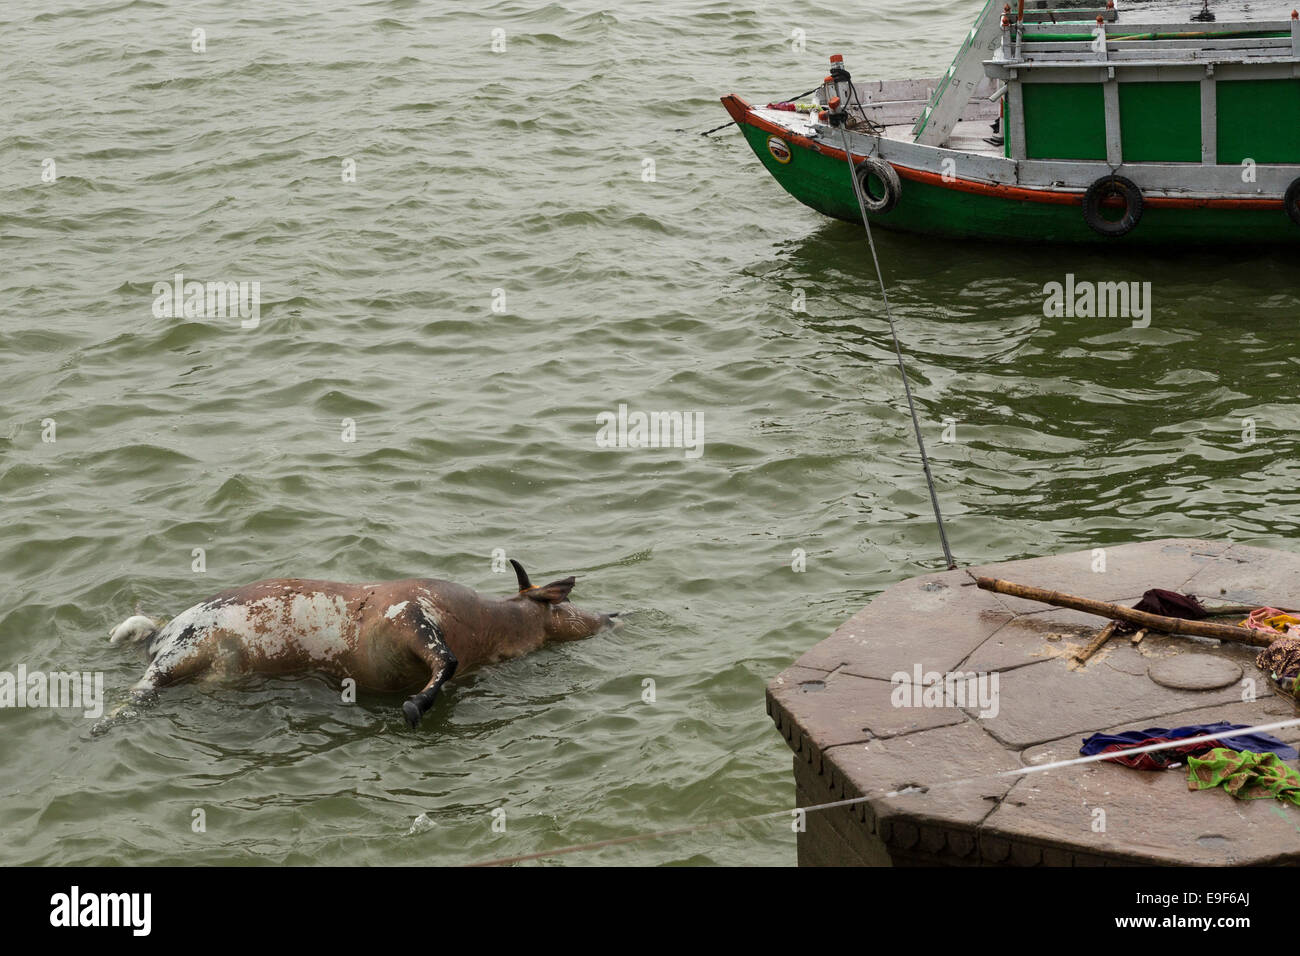 Dead cow in Ganges' waters, Varanasi, Uttar Pradesh, India Stock Photo